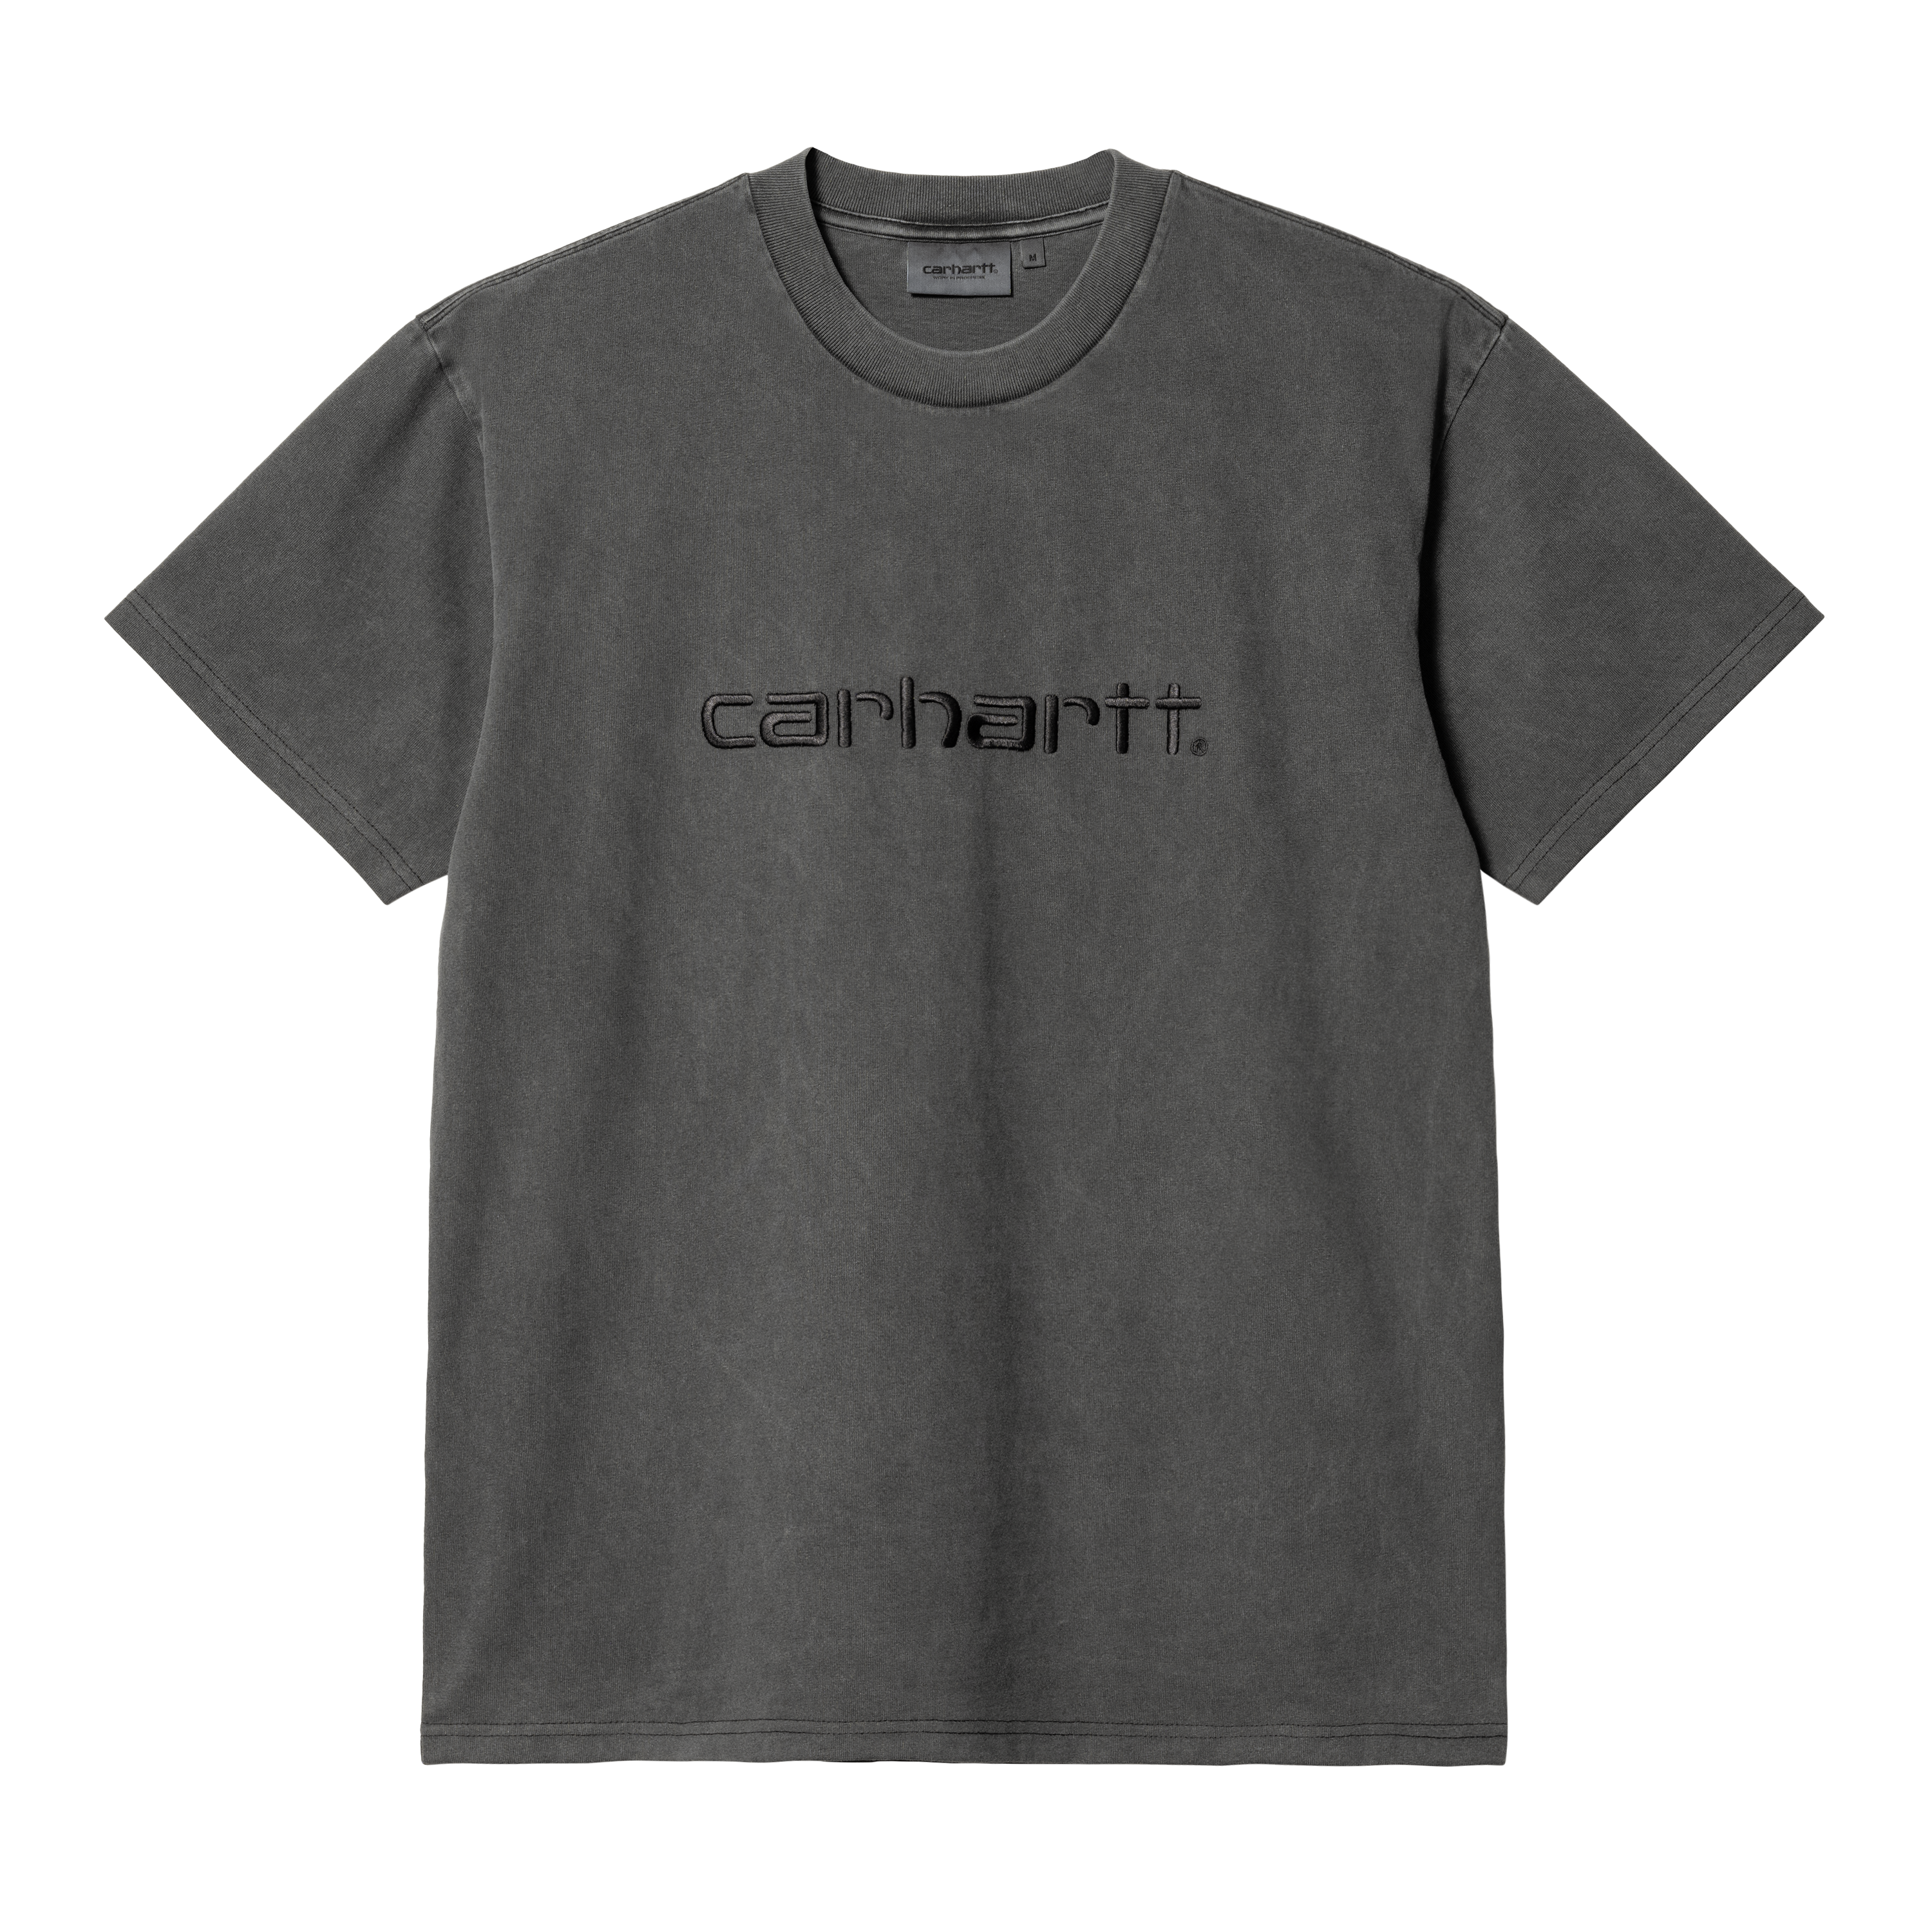 Carhartt WIP Short Sleeve Duster T-Shirt in Black